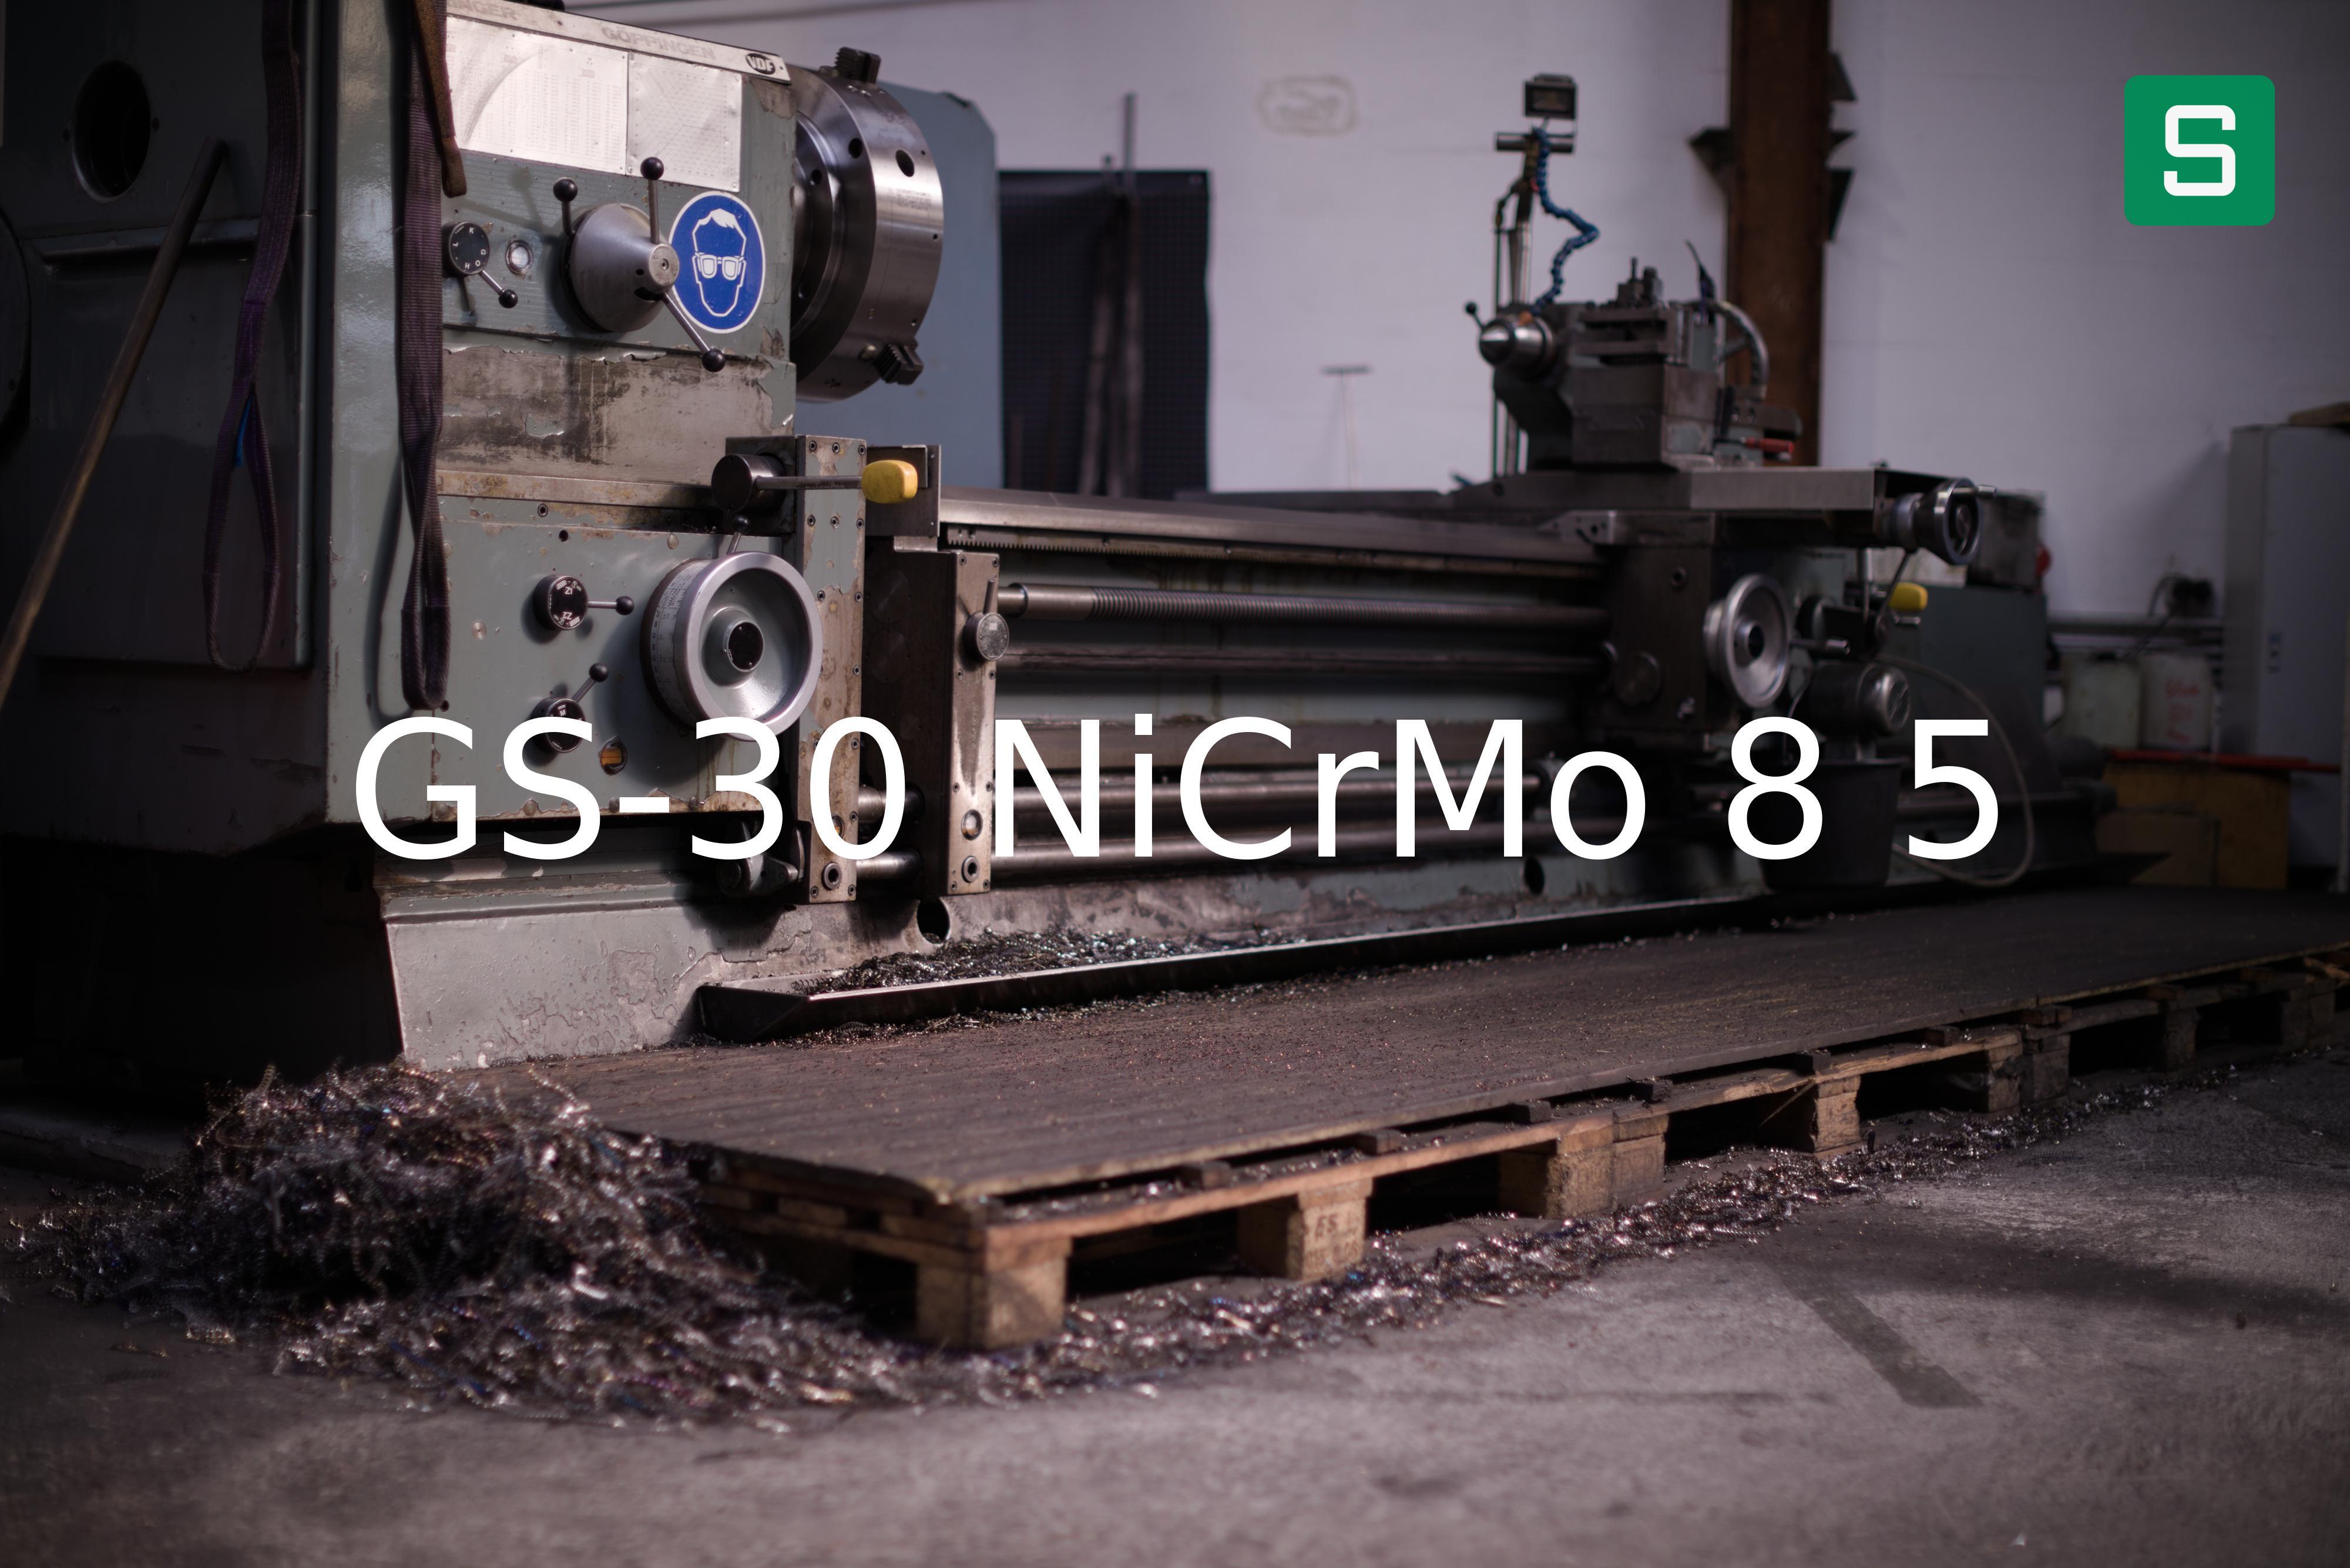 Steel Material: GS-30 NiCrMo 8 5